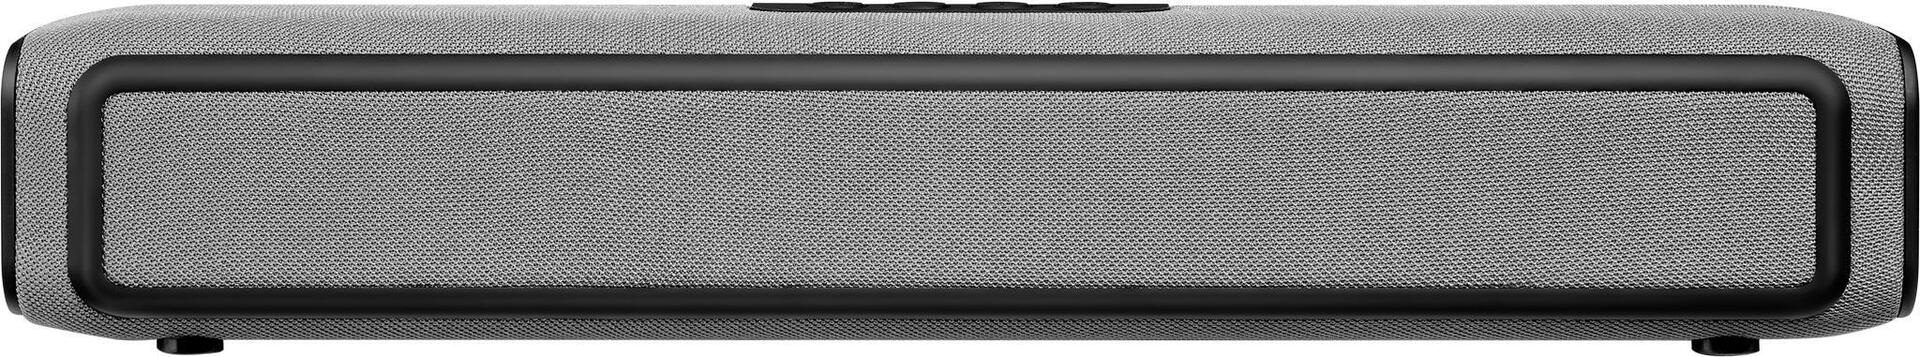 Sandberg Bluetooth Speakerphone Bar (126-35)